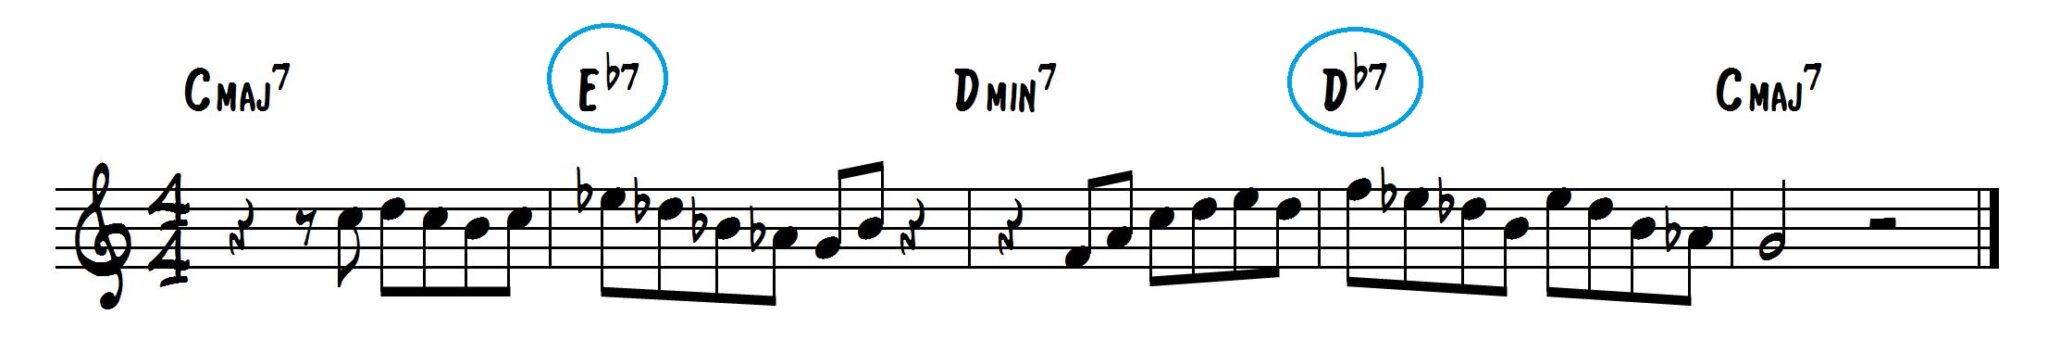 Ex 46: Tritone Substitution in a I-vi-ii-V chord progression in the key of C major